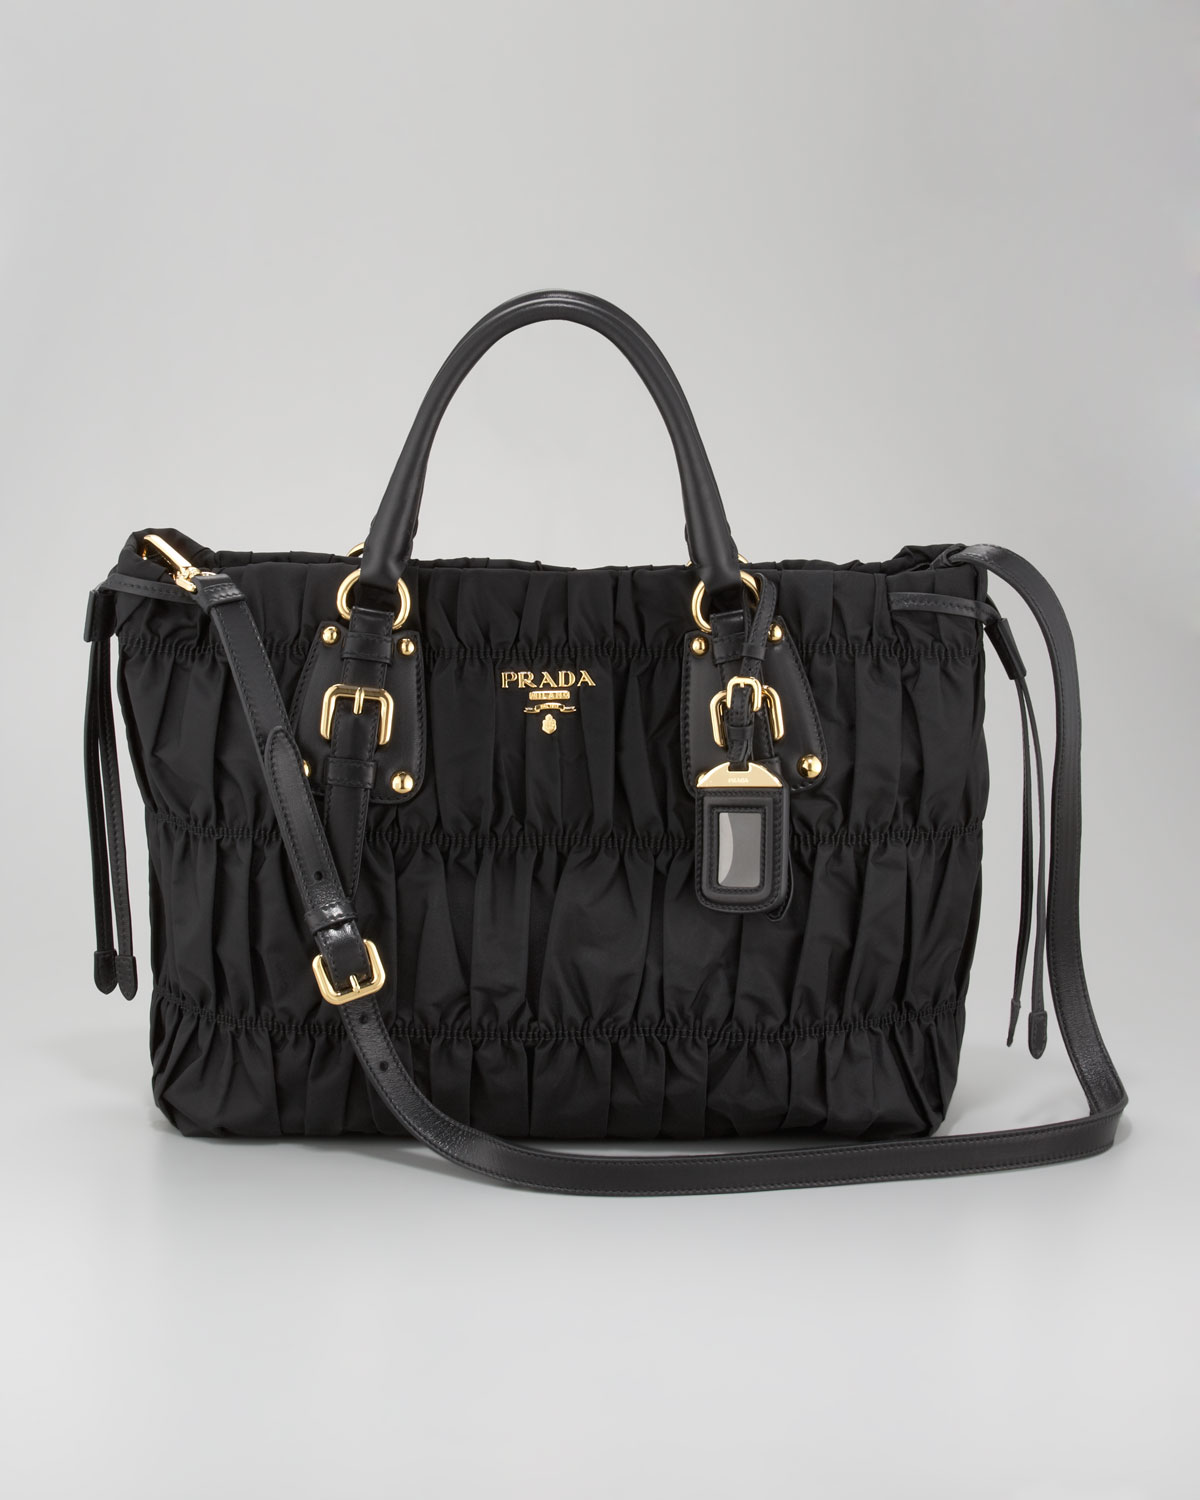 Prada Tessuto Gaufre Tote Bag in Nero (Black) - Lyst